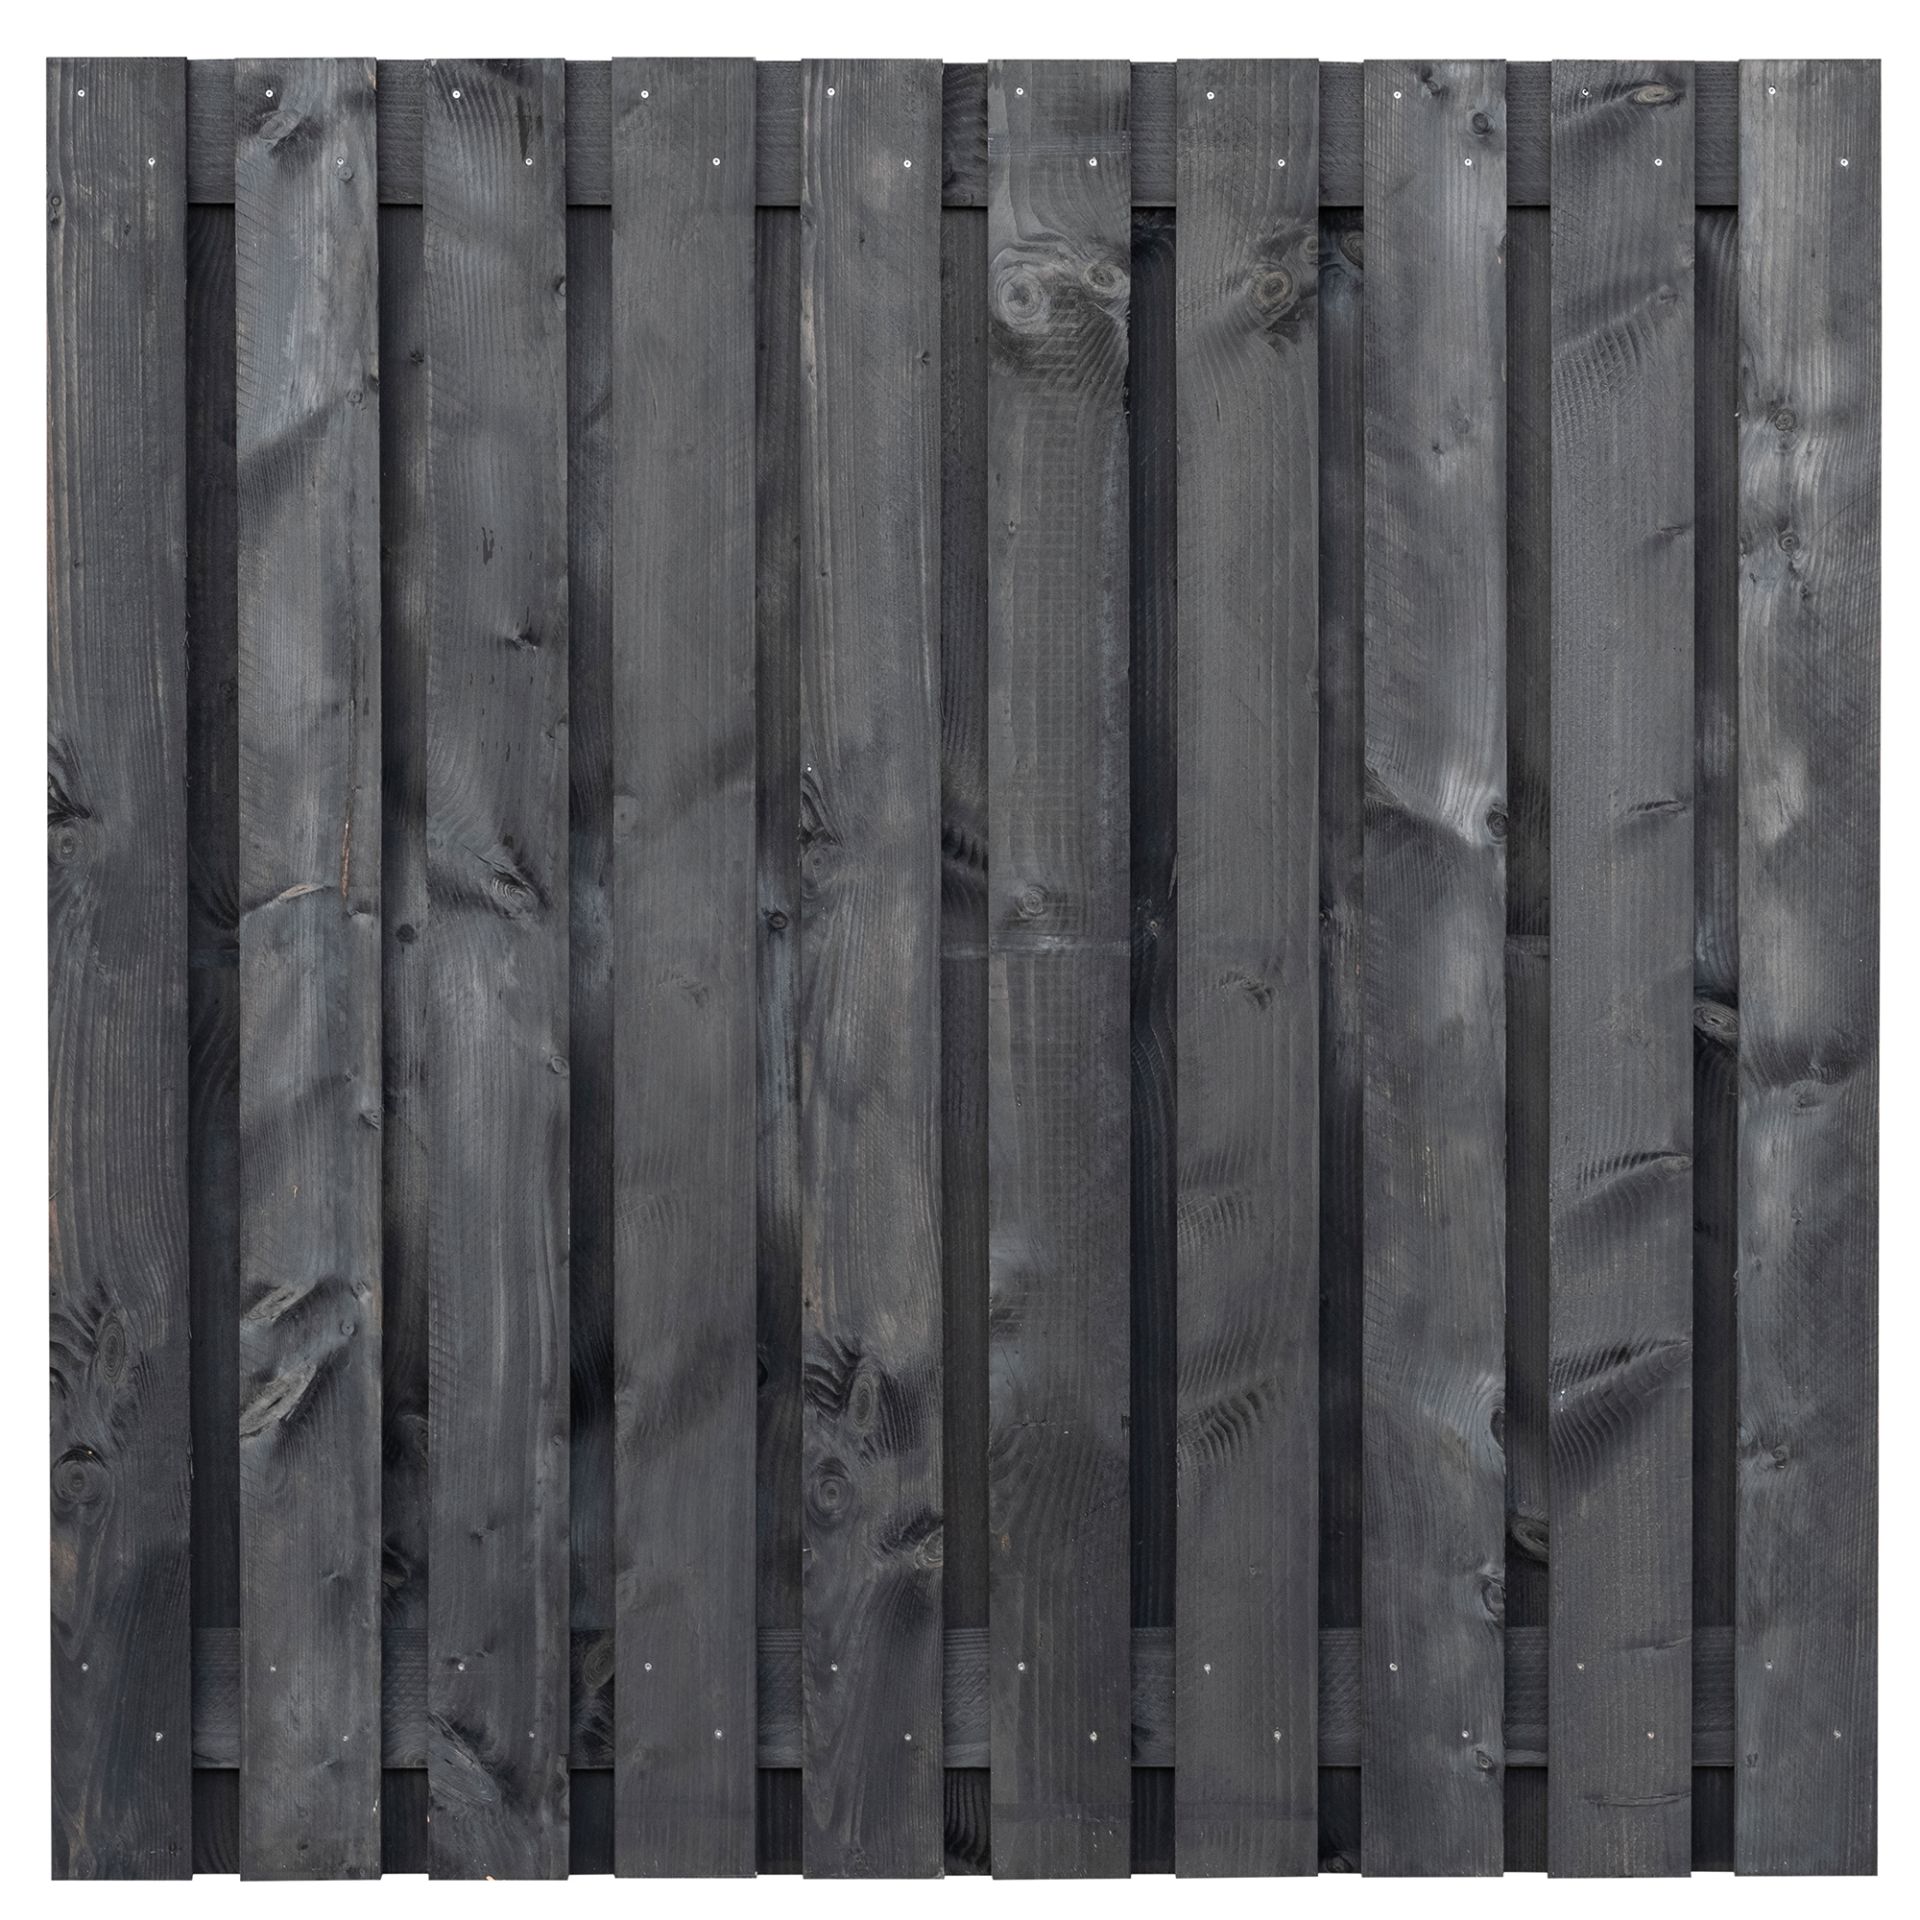 Tuinscherm lariks 21 planks (19+2) - Marlies 180x180cm zwart geïmpregneerd - 1.6x14.0cm 1 | De Vliert Sierbestrating